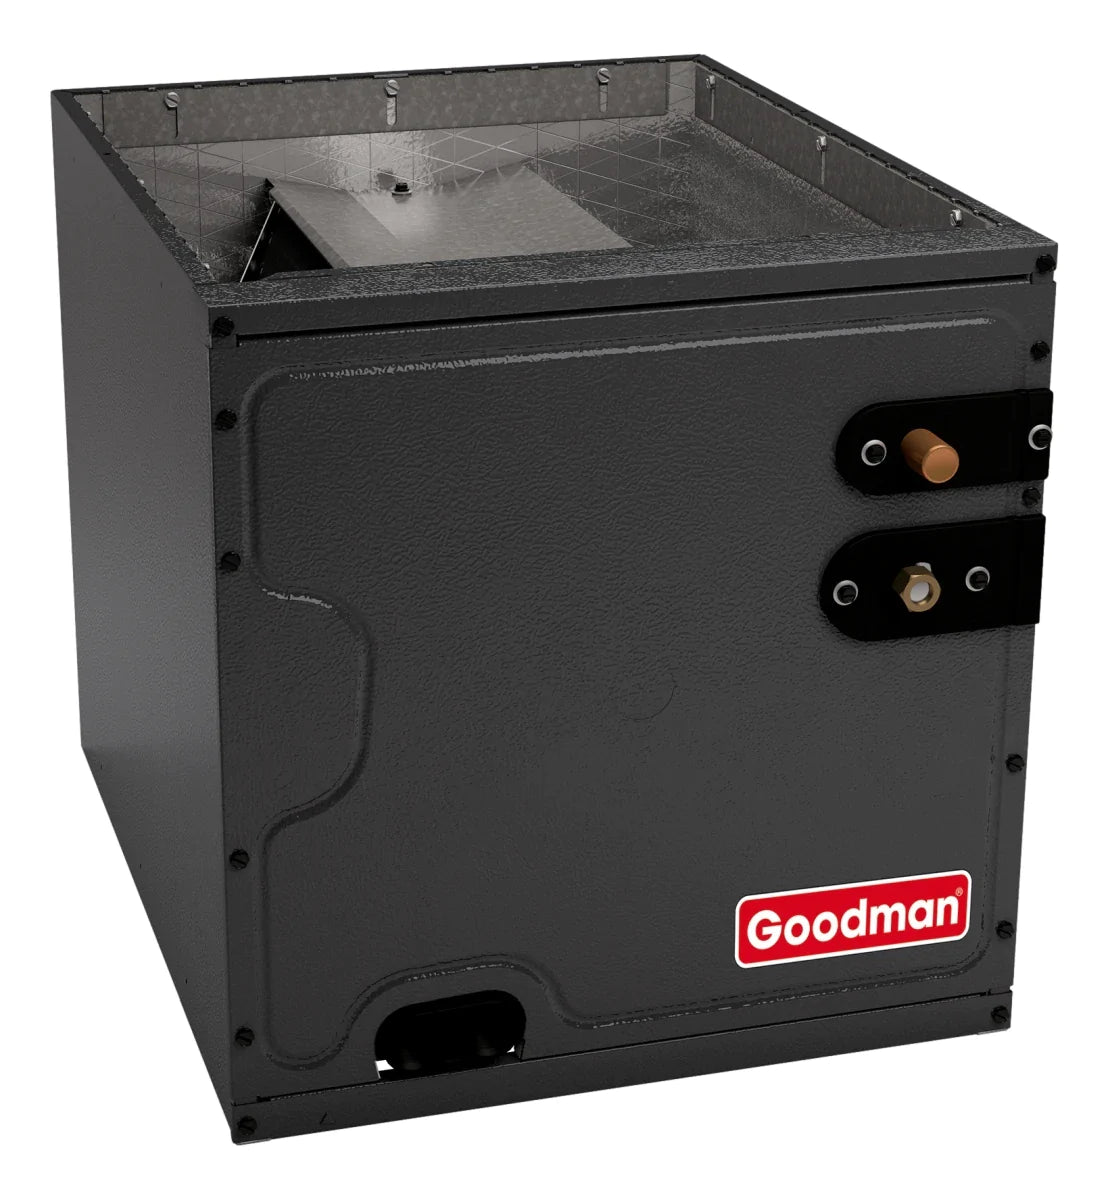 Goodman 2 TON 14.5 SEER2 Downflow Heat Pump system with 96% AFUE 40k BTU 2 stage Low NOx Furnace (GSZH502410, CAPTA2422B4, GCVC960403BN)